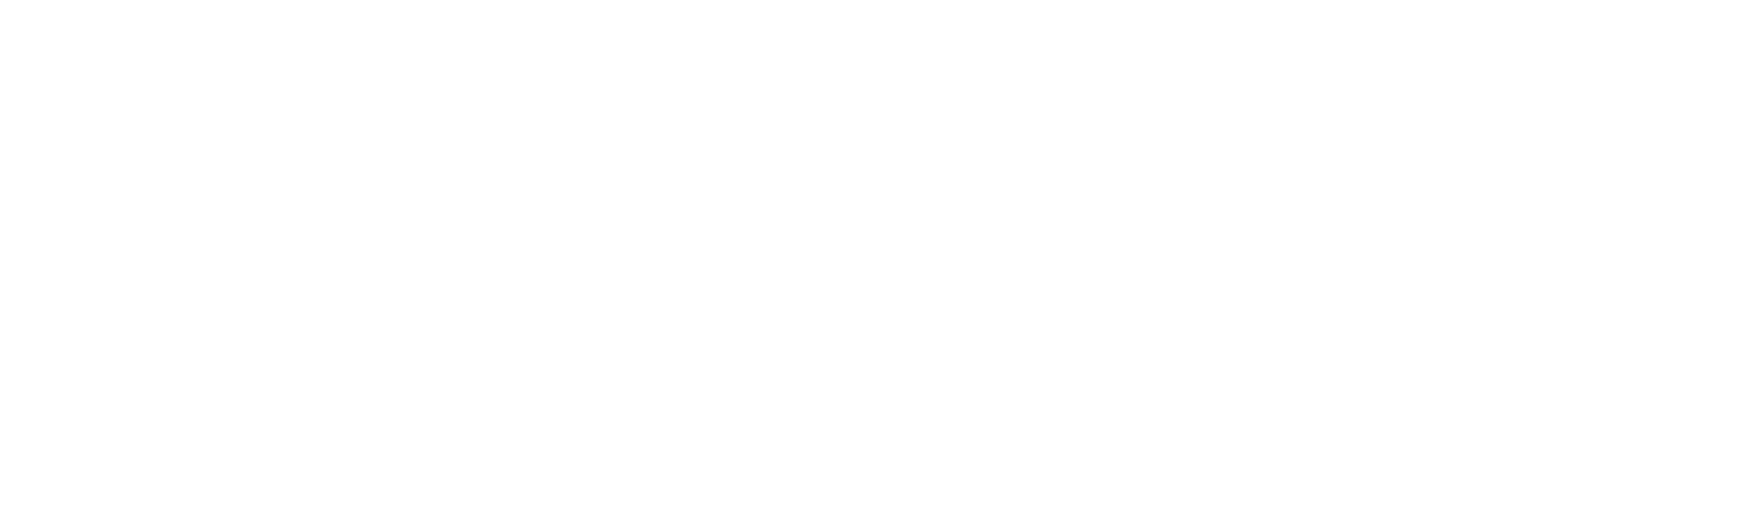 David Sawyer wordmark logo (white)